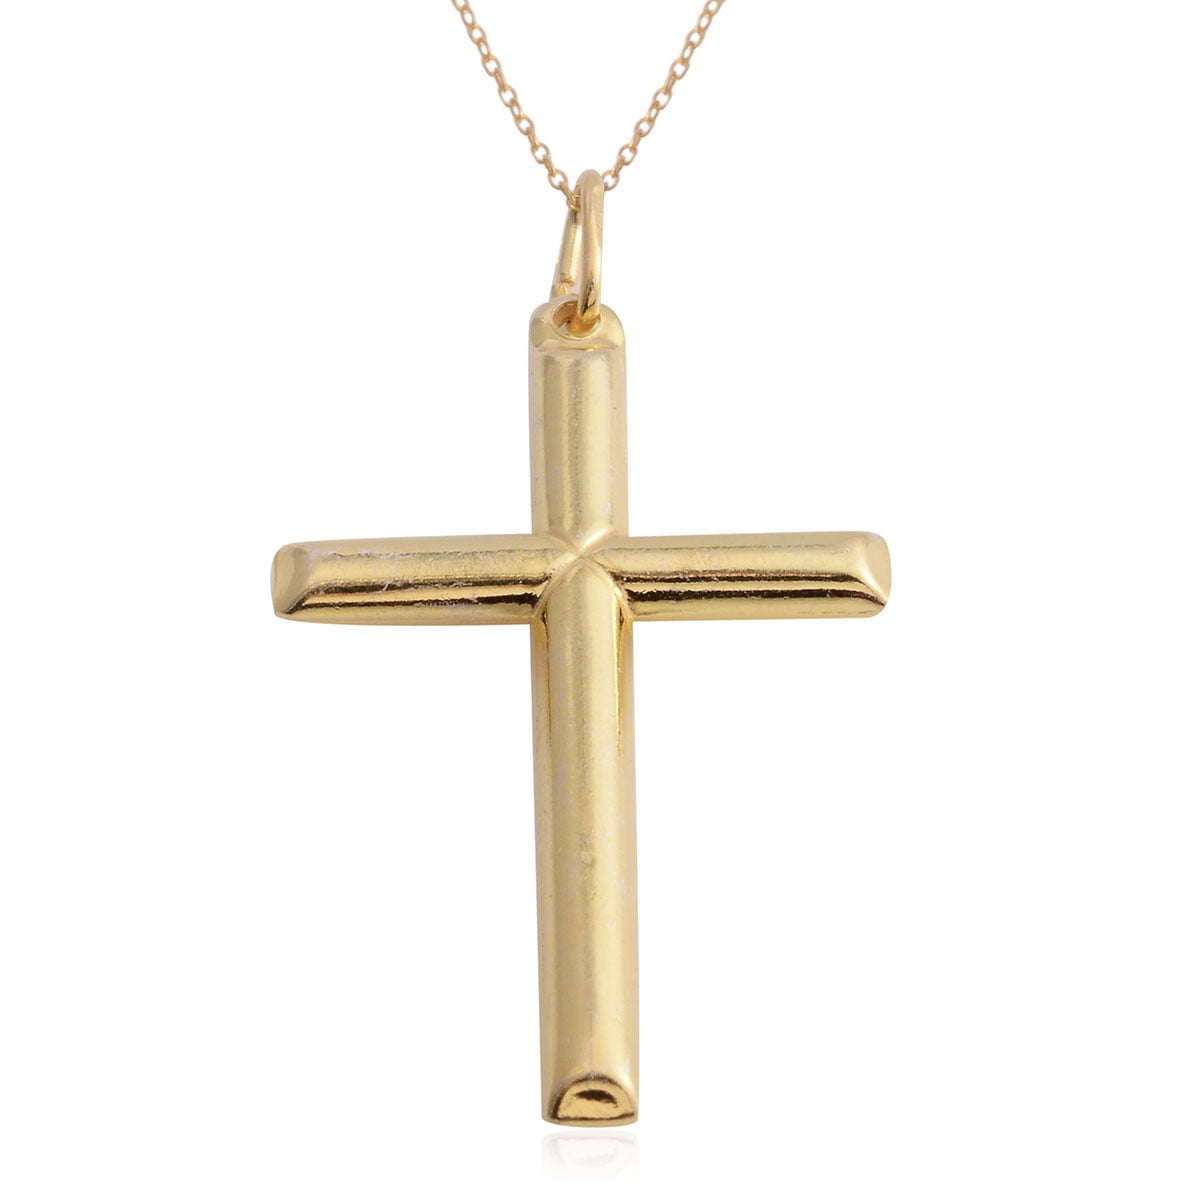 Shop LC Delivering Joy Hypoallergenic Cross Pendant Necklace 24 for Women